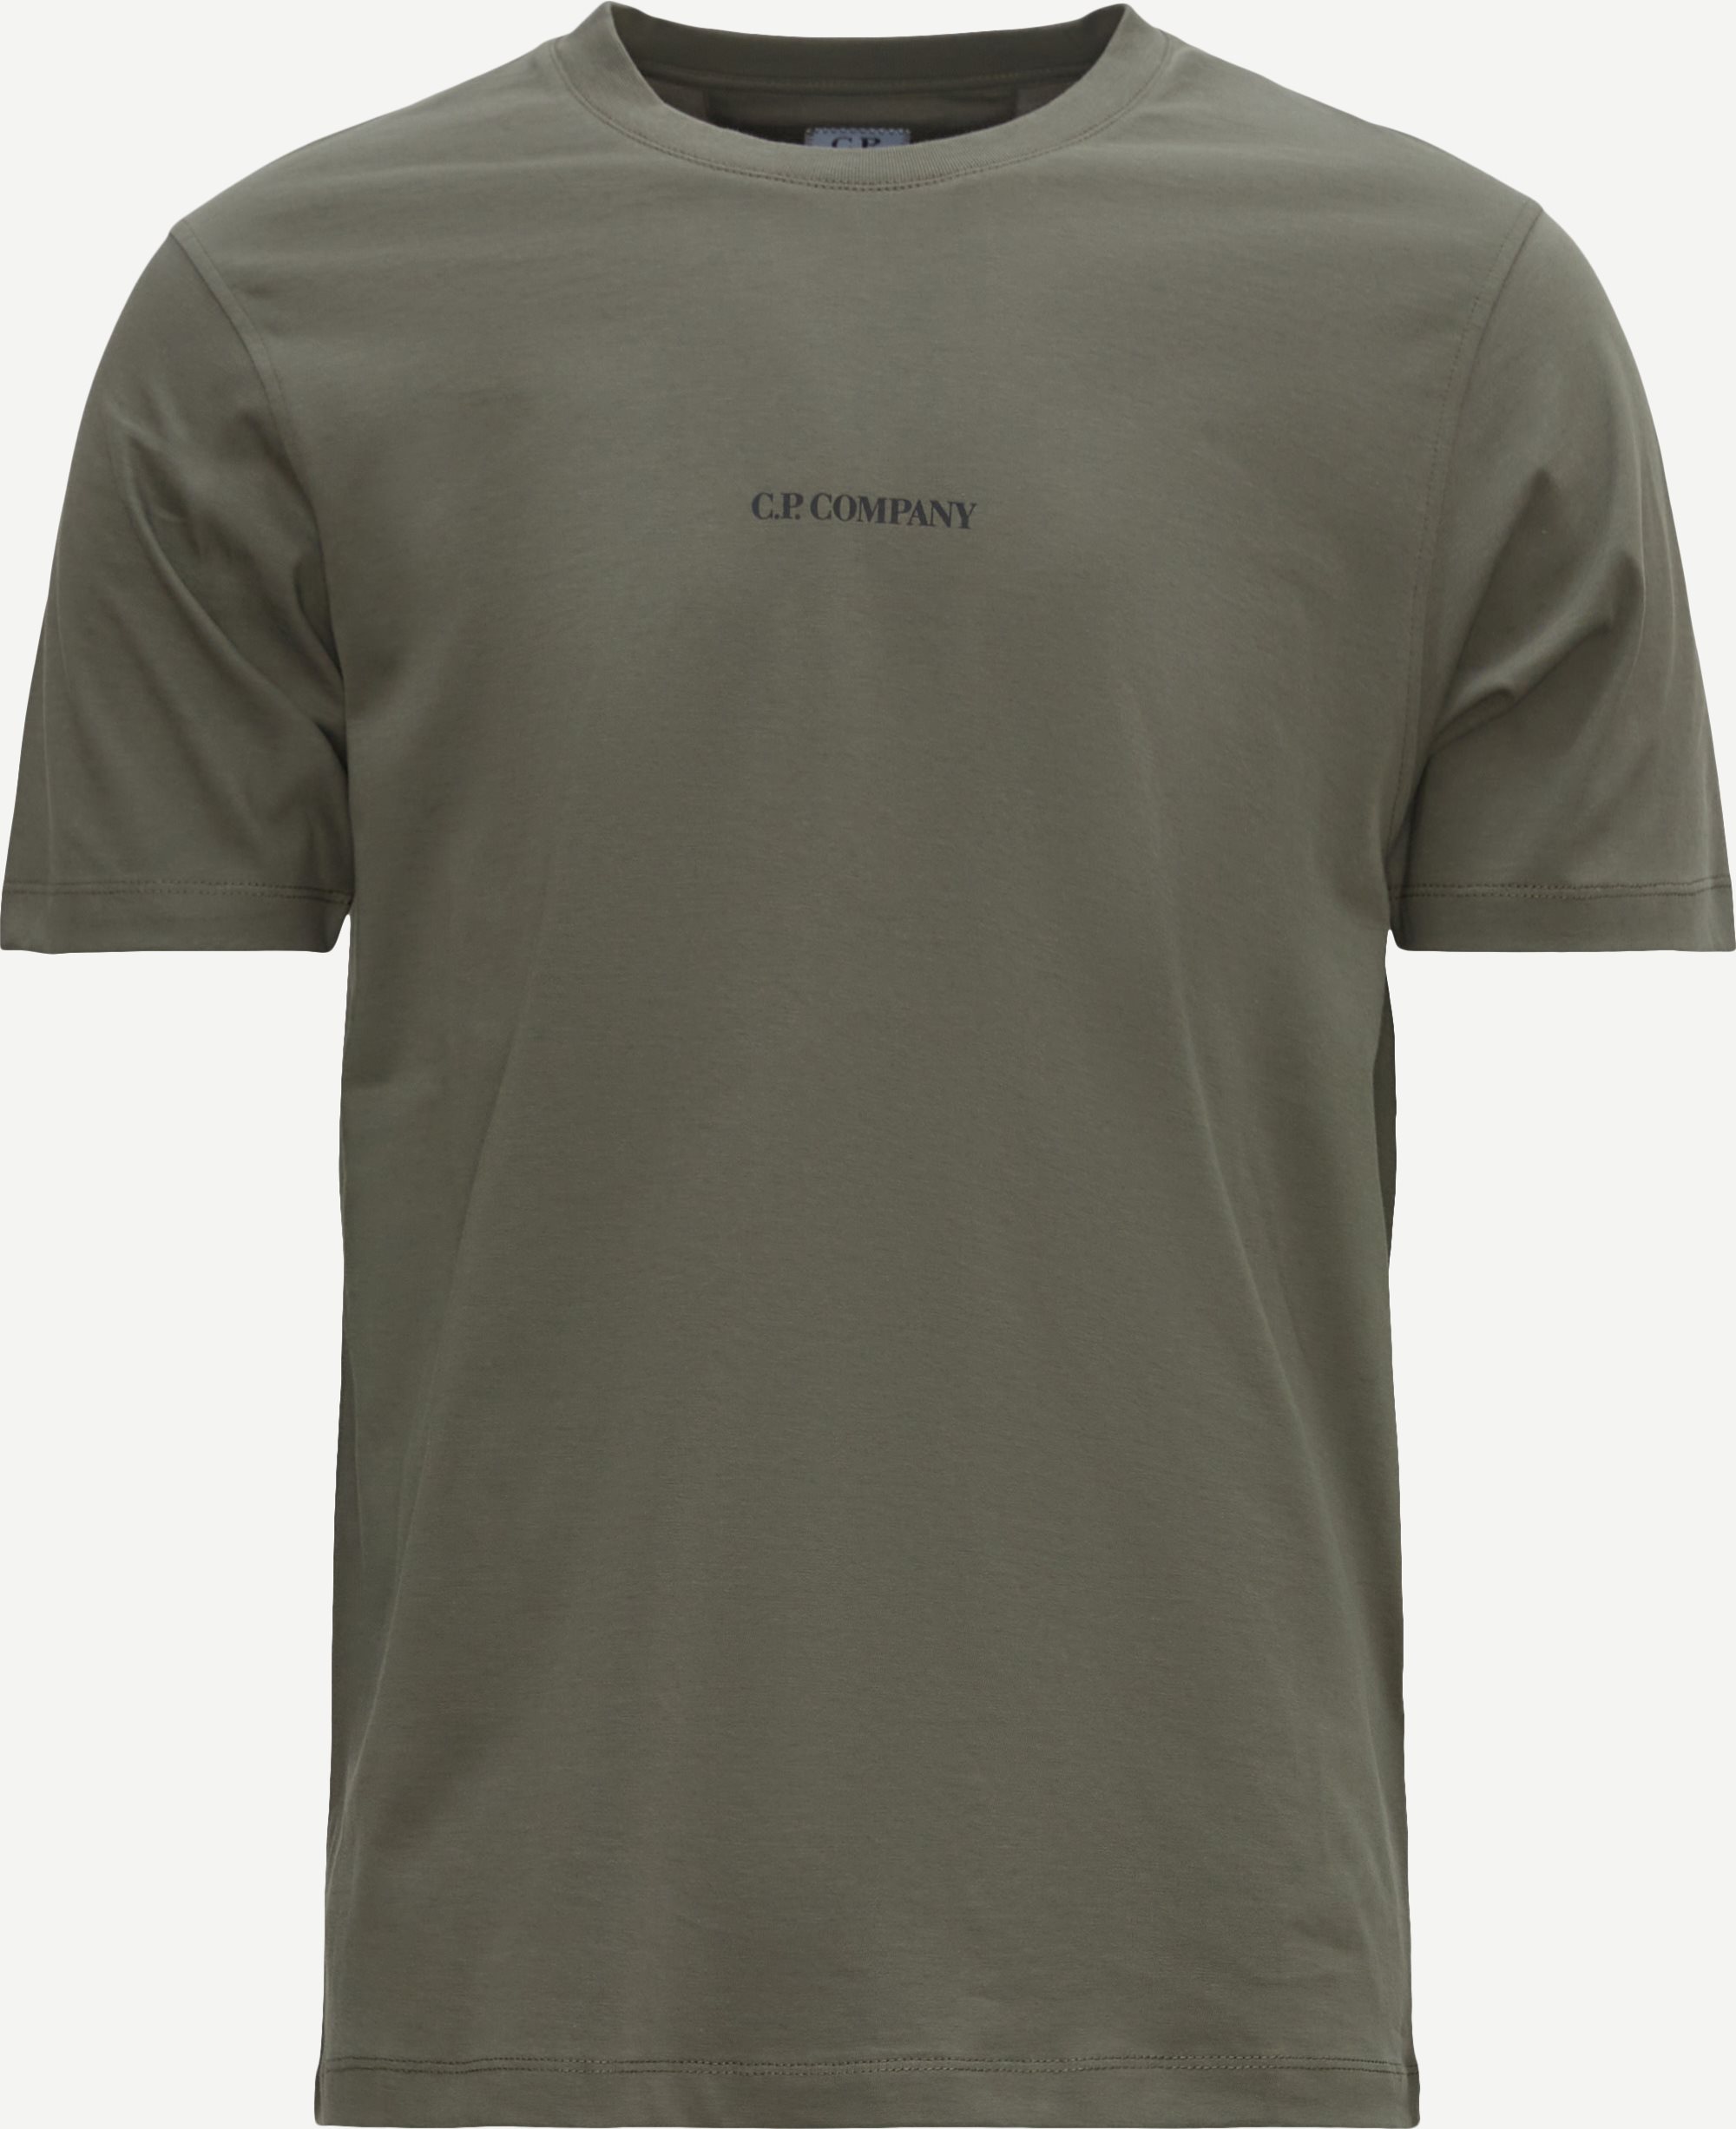 C.P. Company T-shirts TS048A 6011W Army